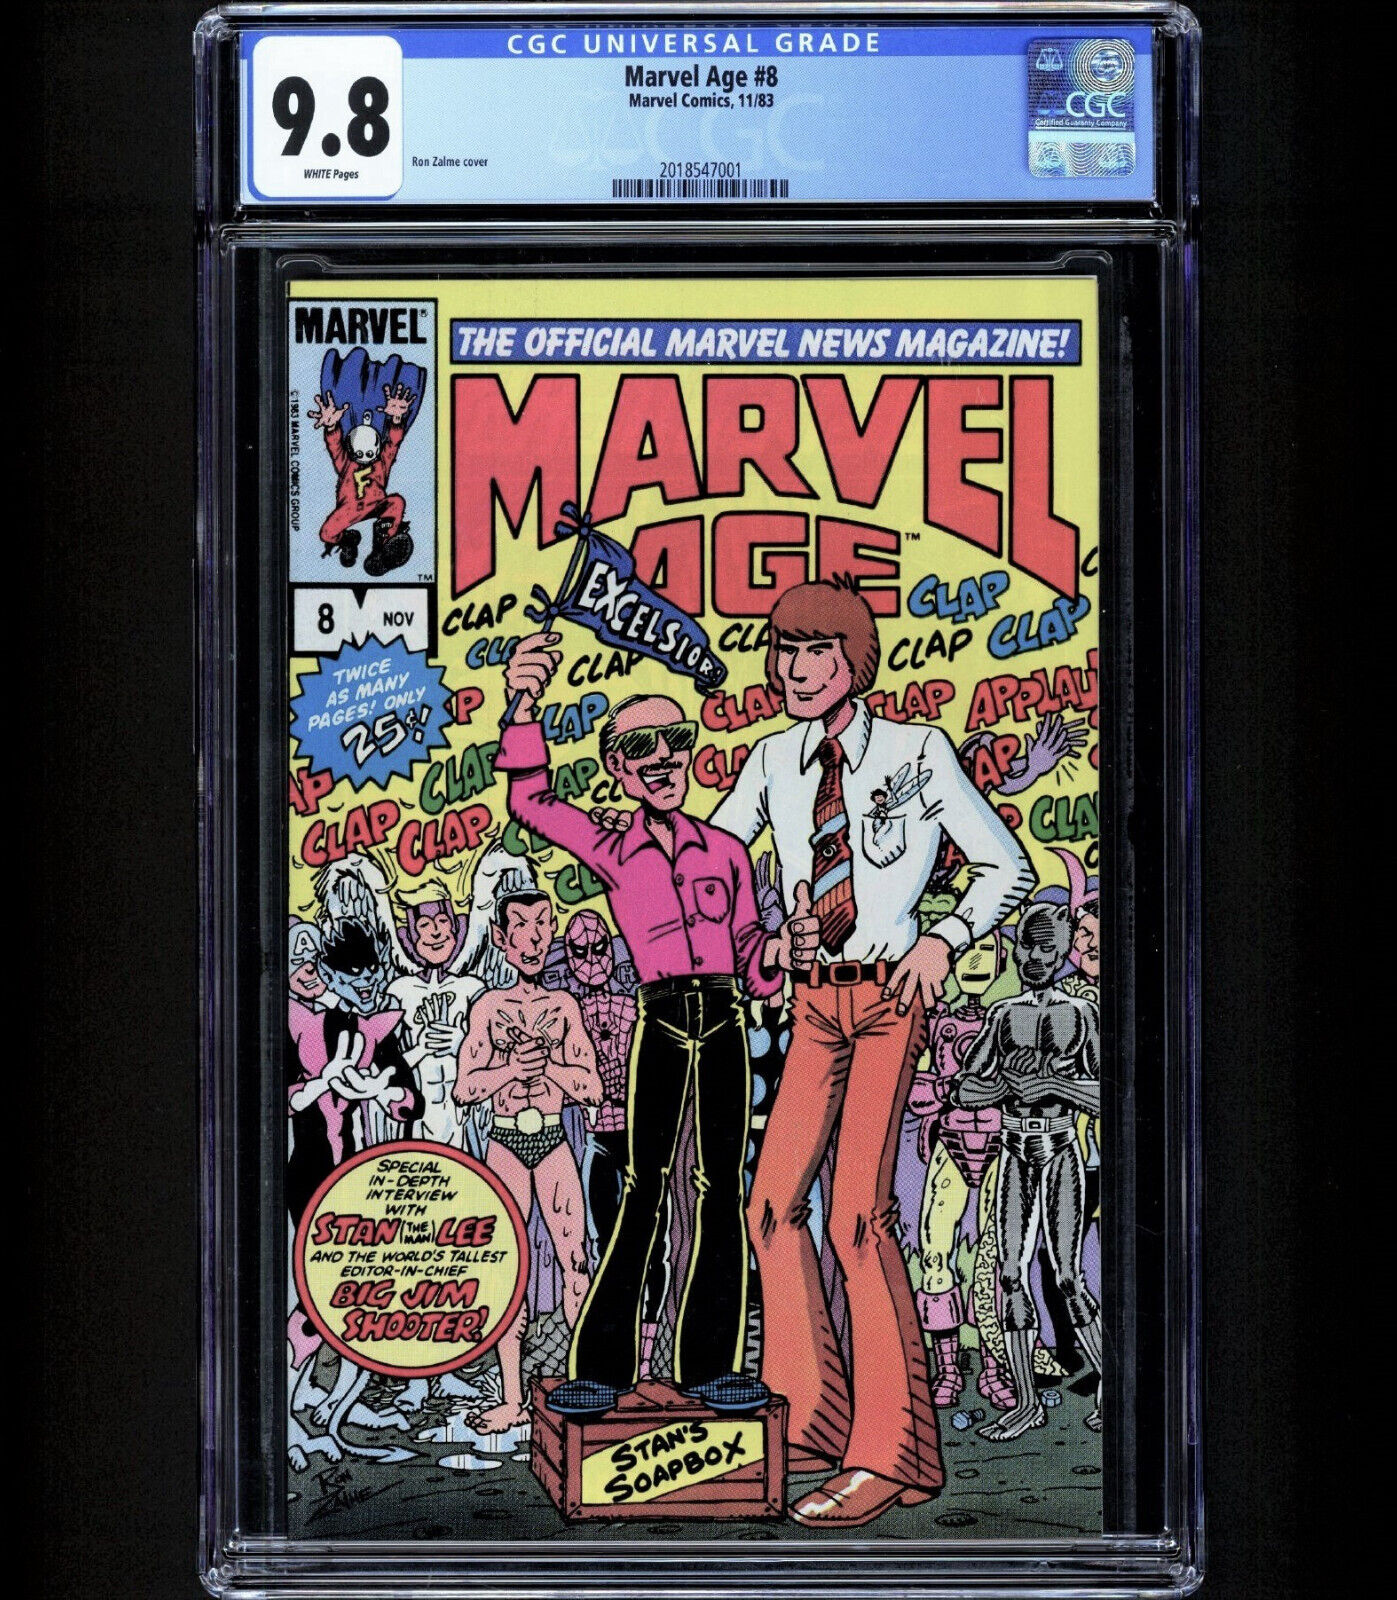 MARVEL AGE #8 CGC 9.8 STAN LEE EXCELSIOR Marvel Comics 1983 NM MT